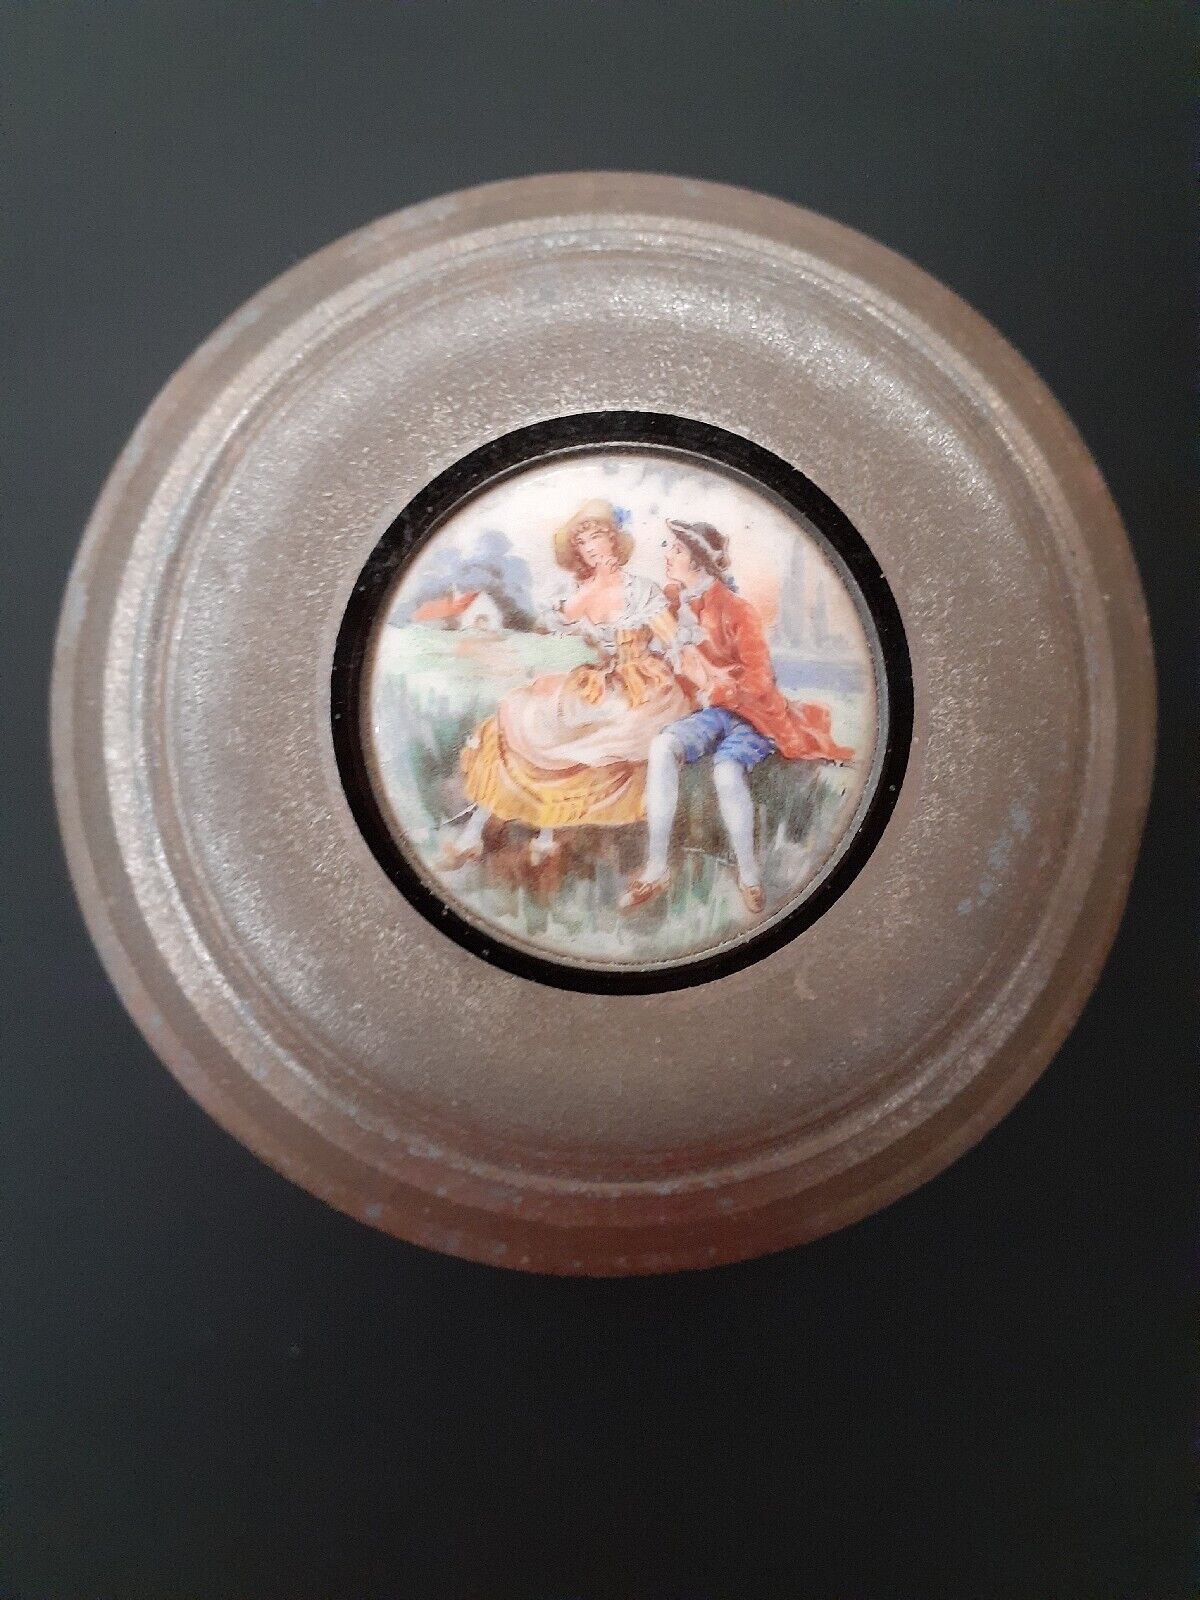 Vintage Thorens Silverite Music Box powder compact & Mirror Romantic Decor Works